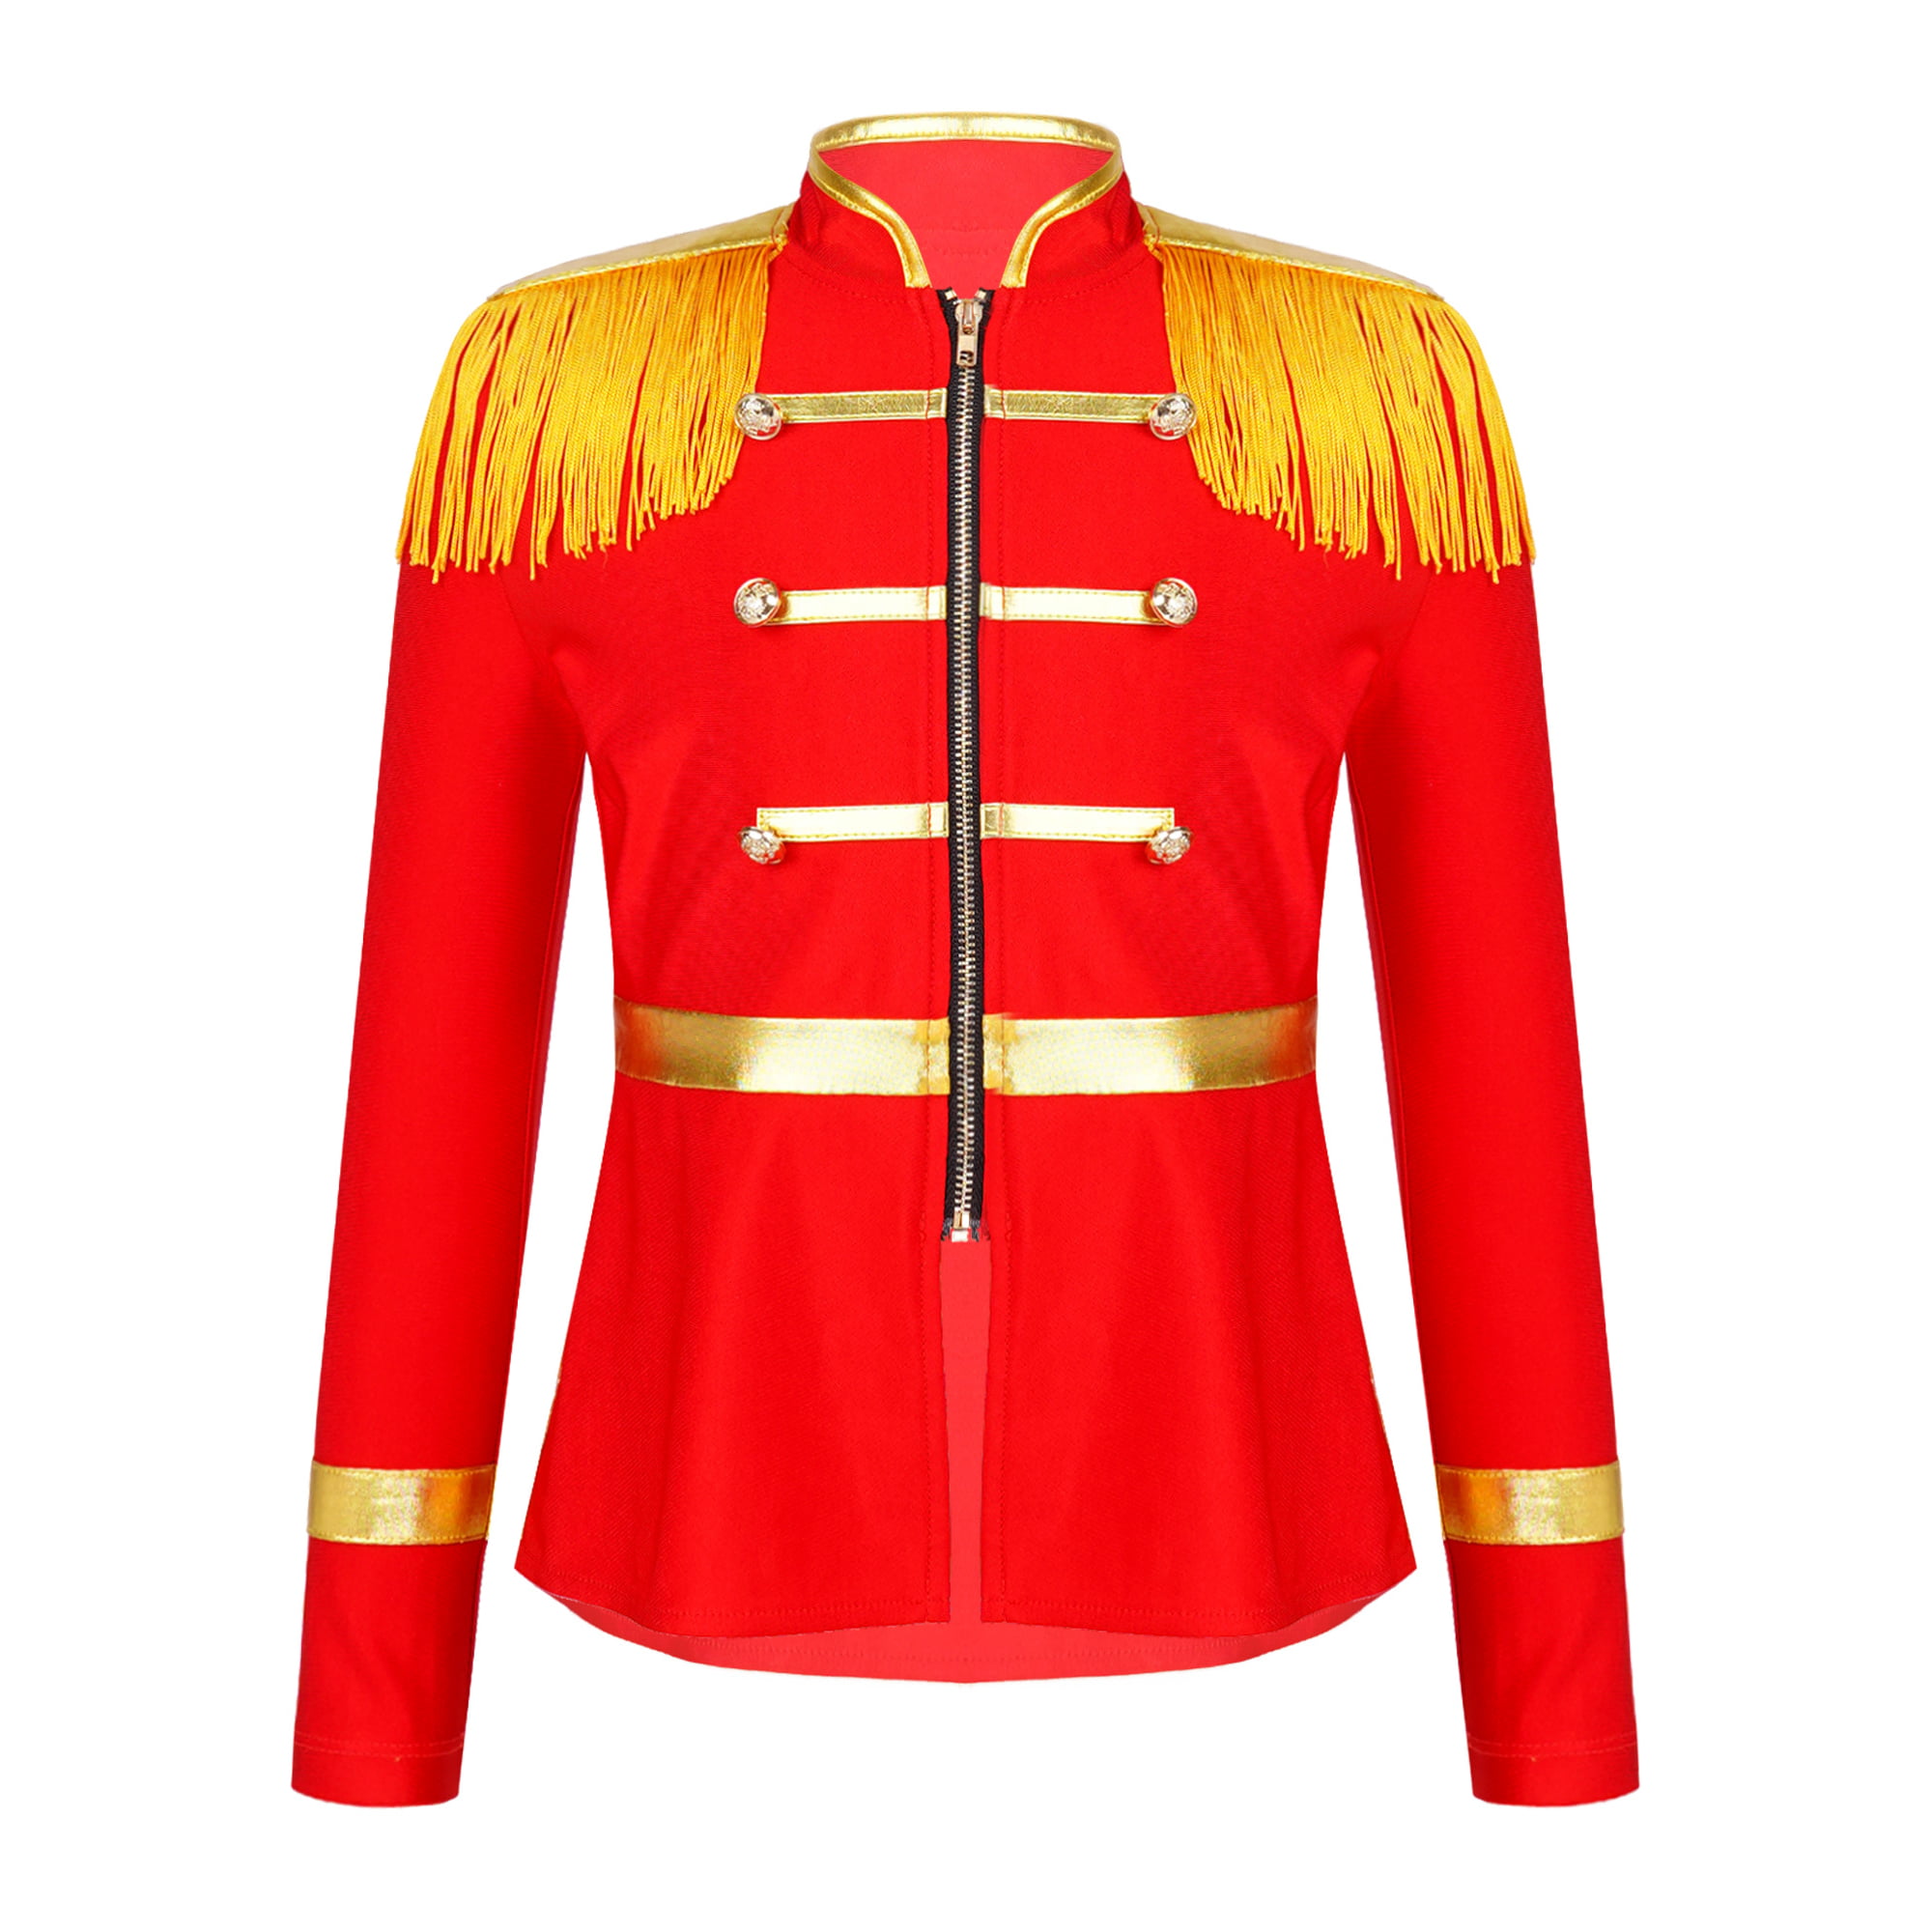 Military Band Jacket